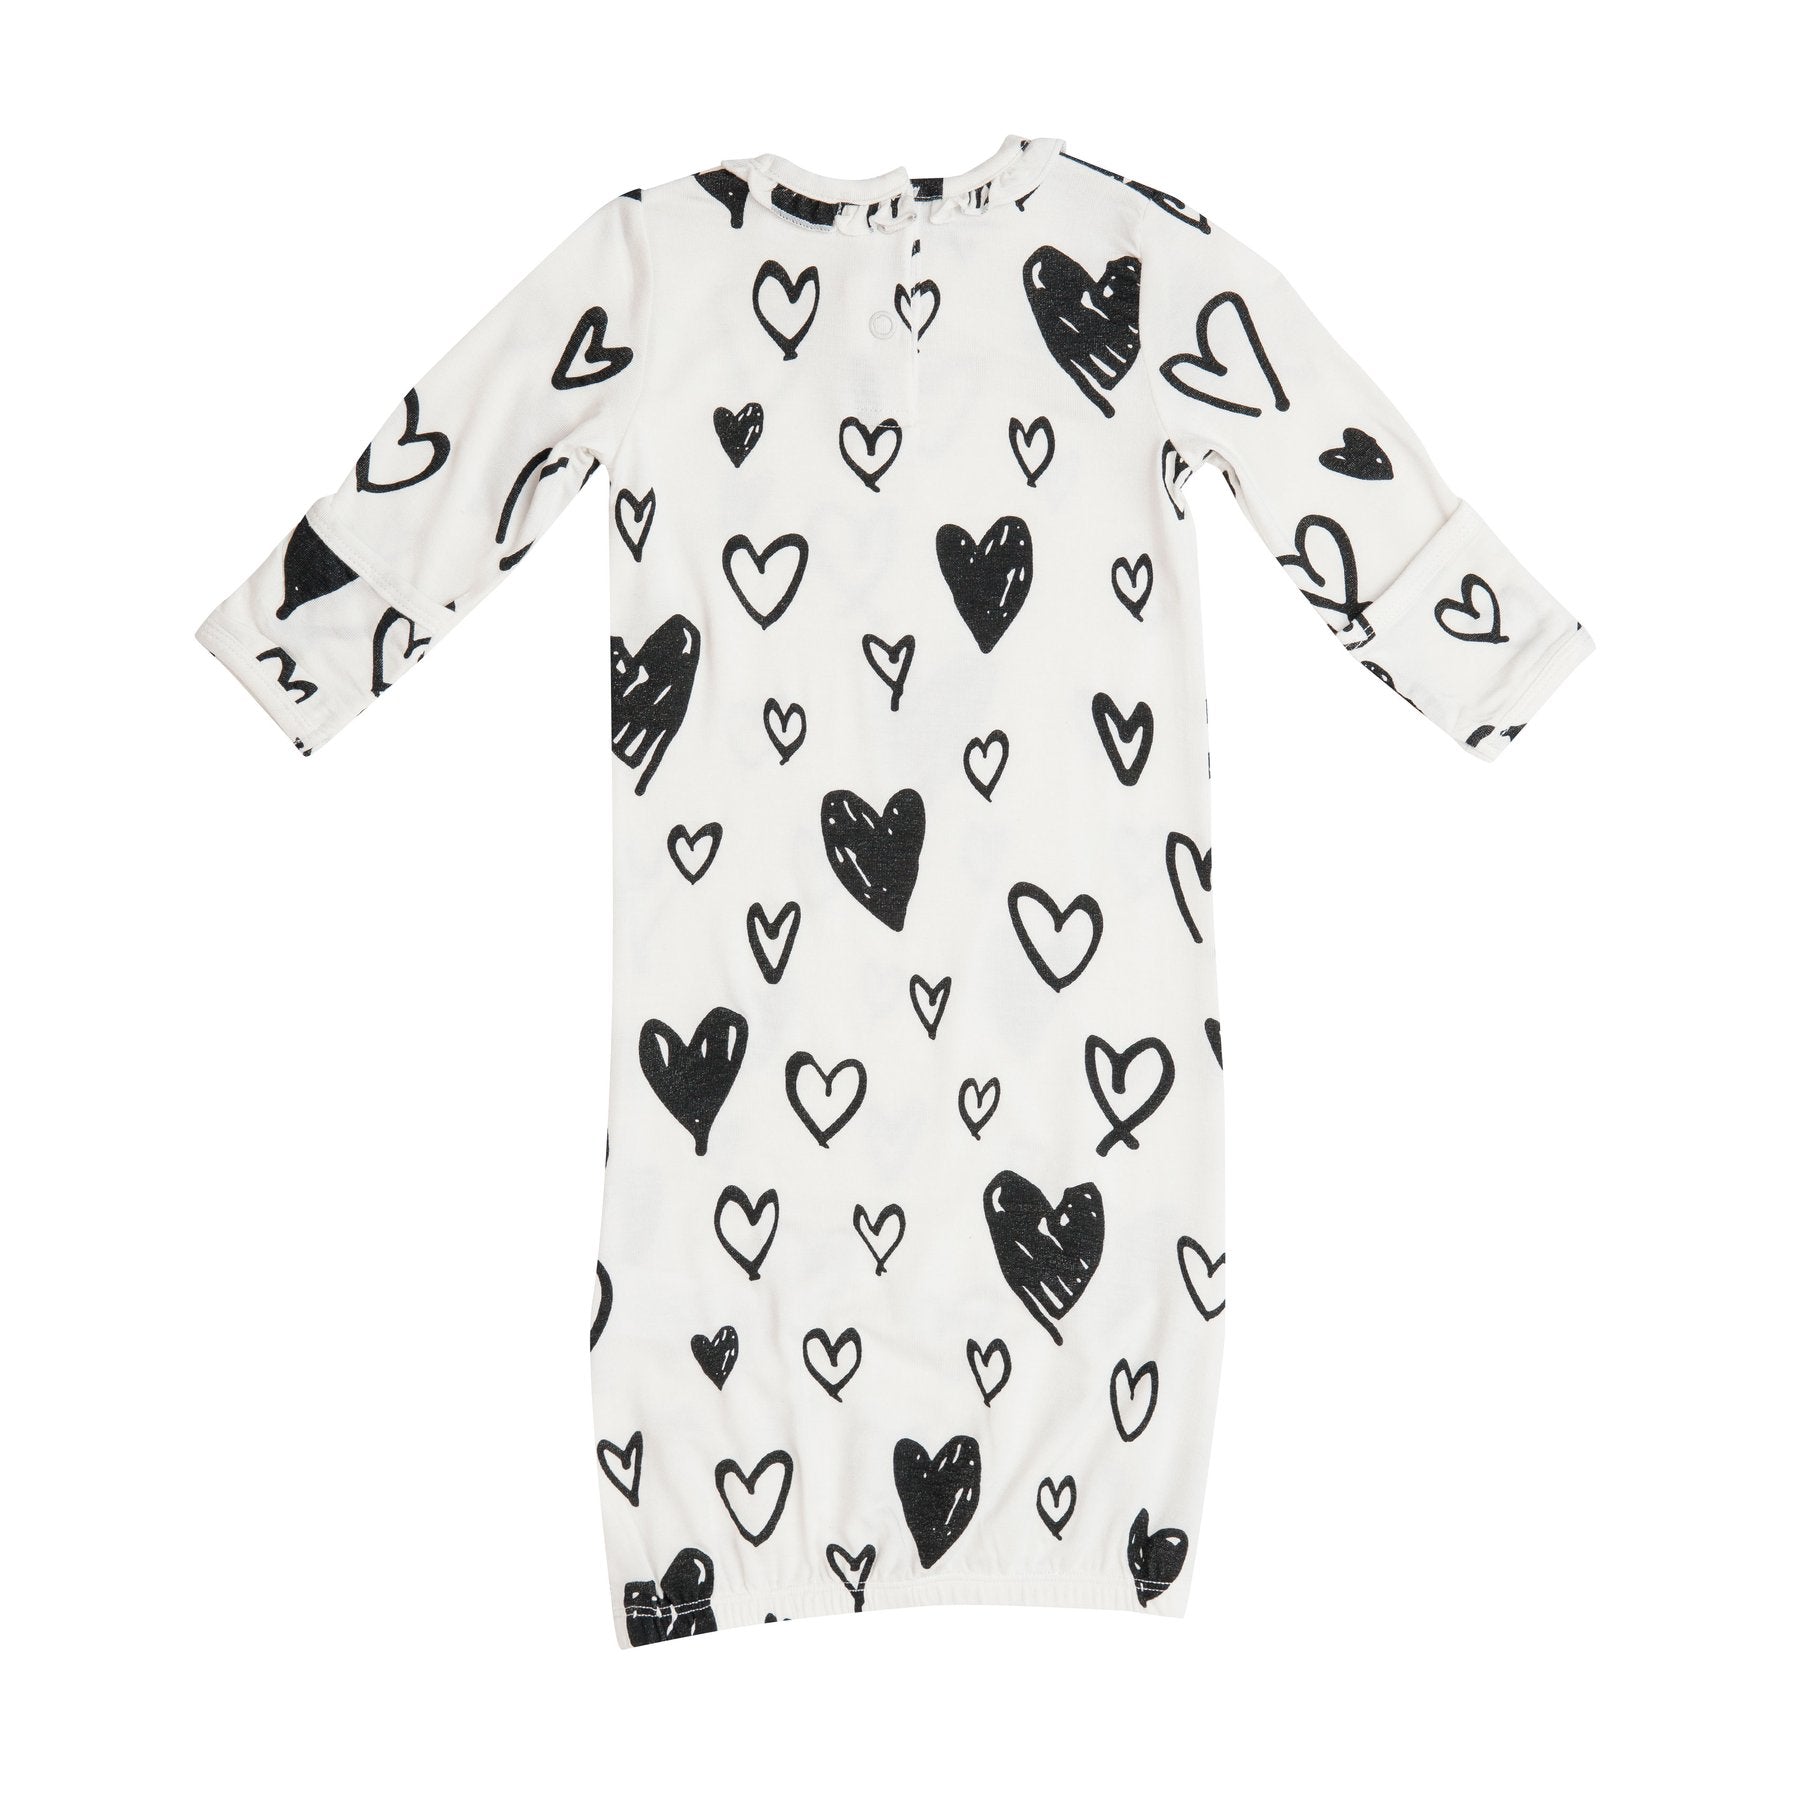 Kimono Gown in Black and White Hearts  - Doodlebug's Children's Boutique